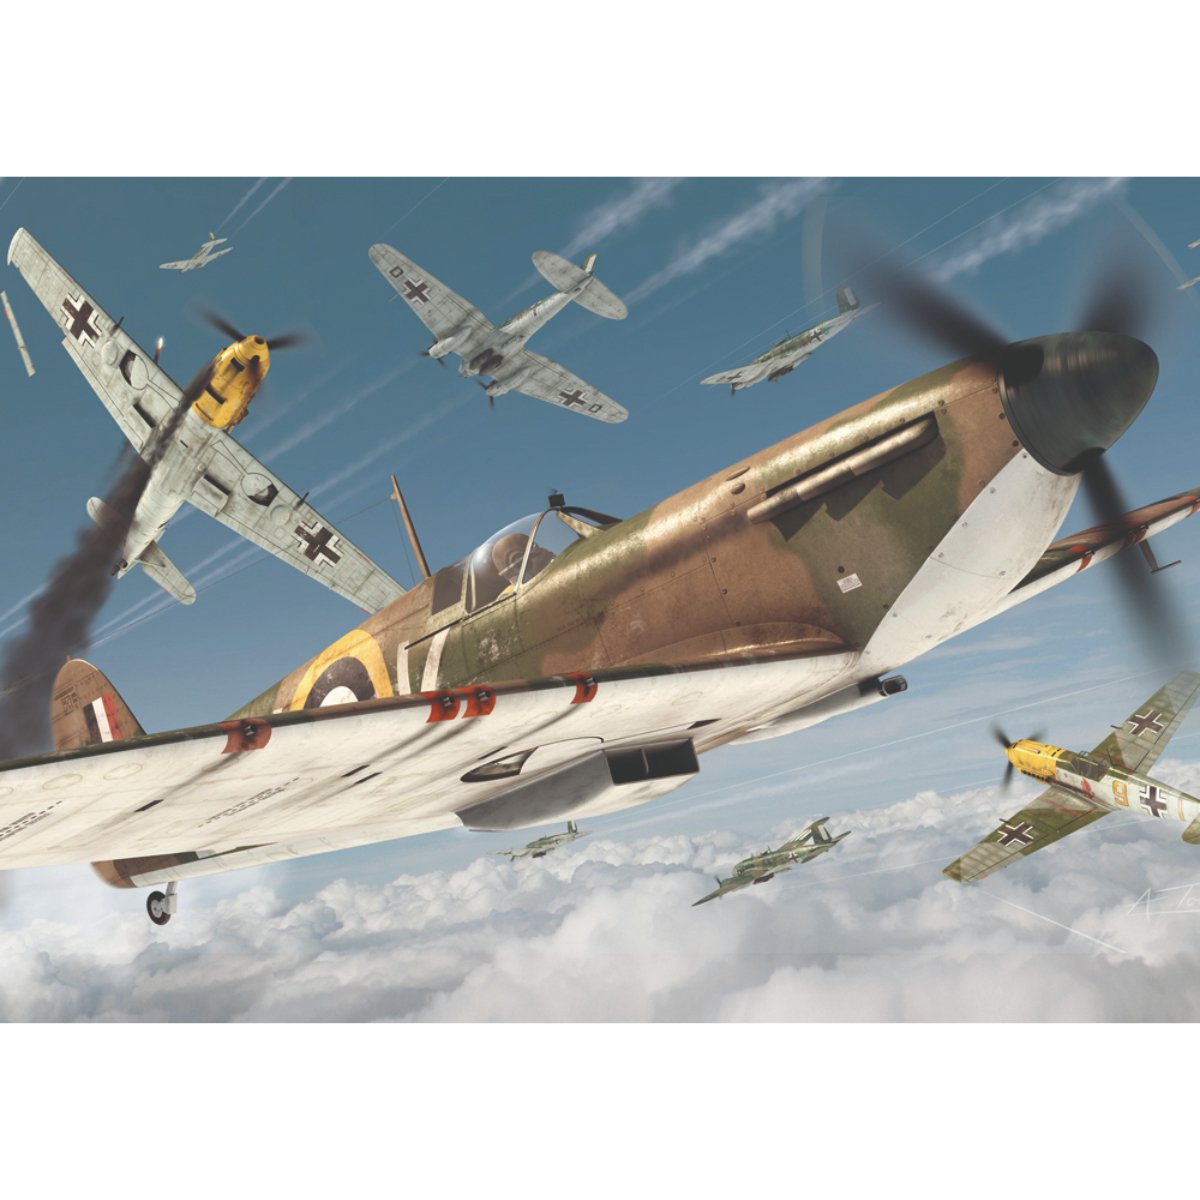 Airfix Supermarine Spitfire Mk.Ia 1000 Piece Puzzle - Phillips Hobbies